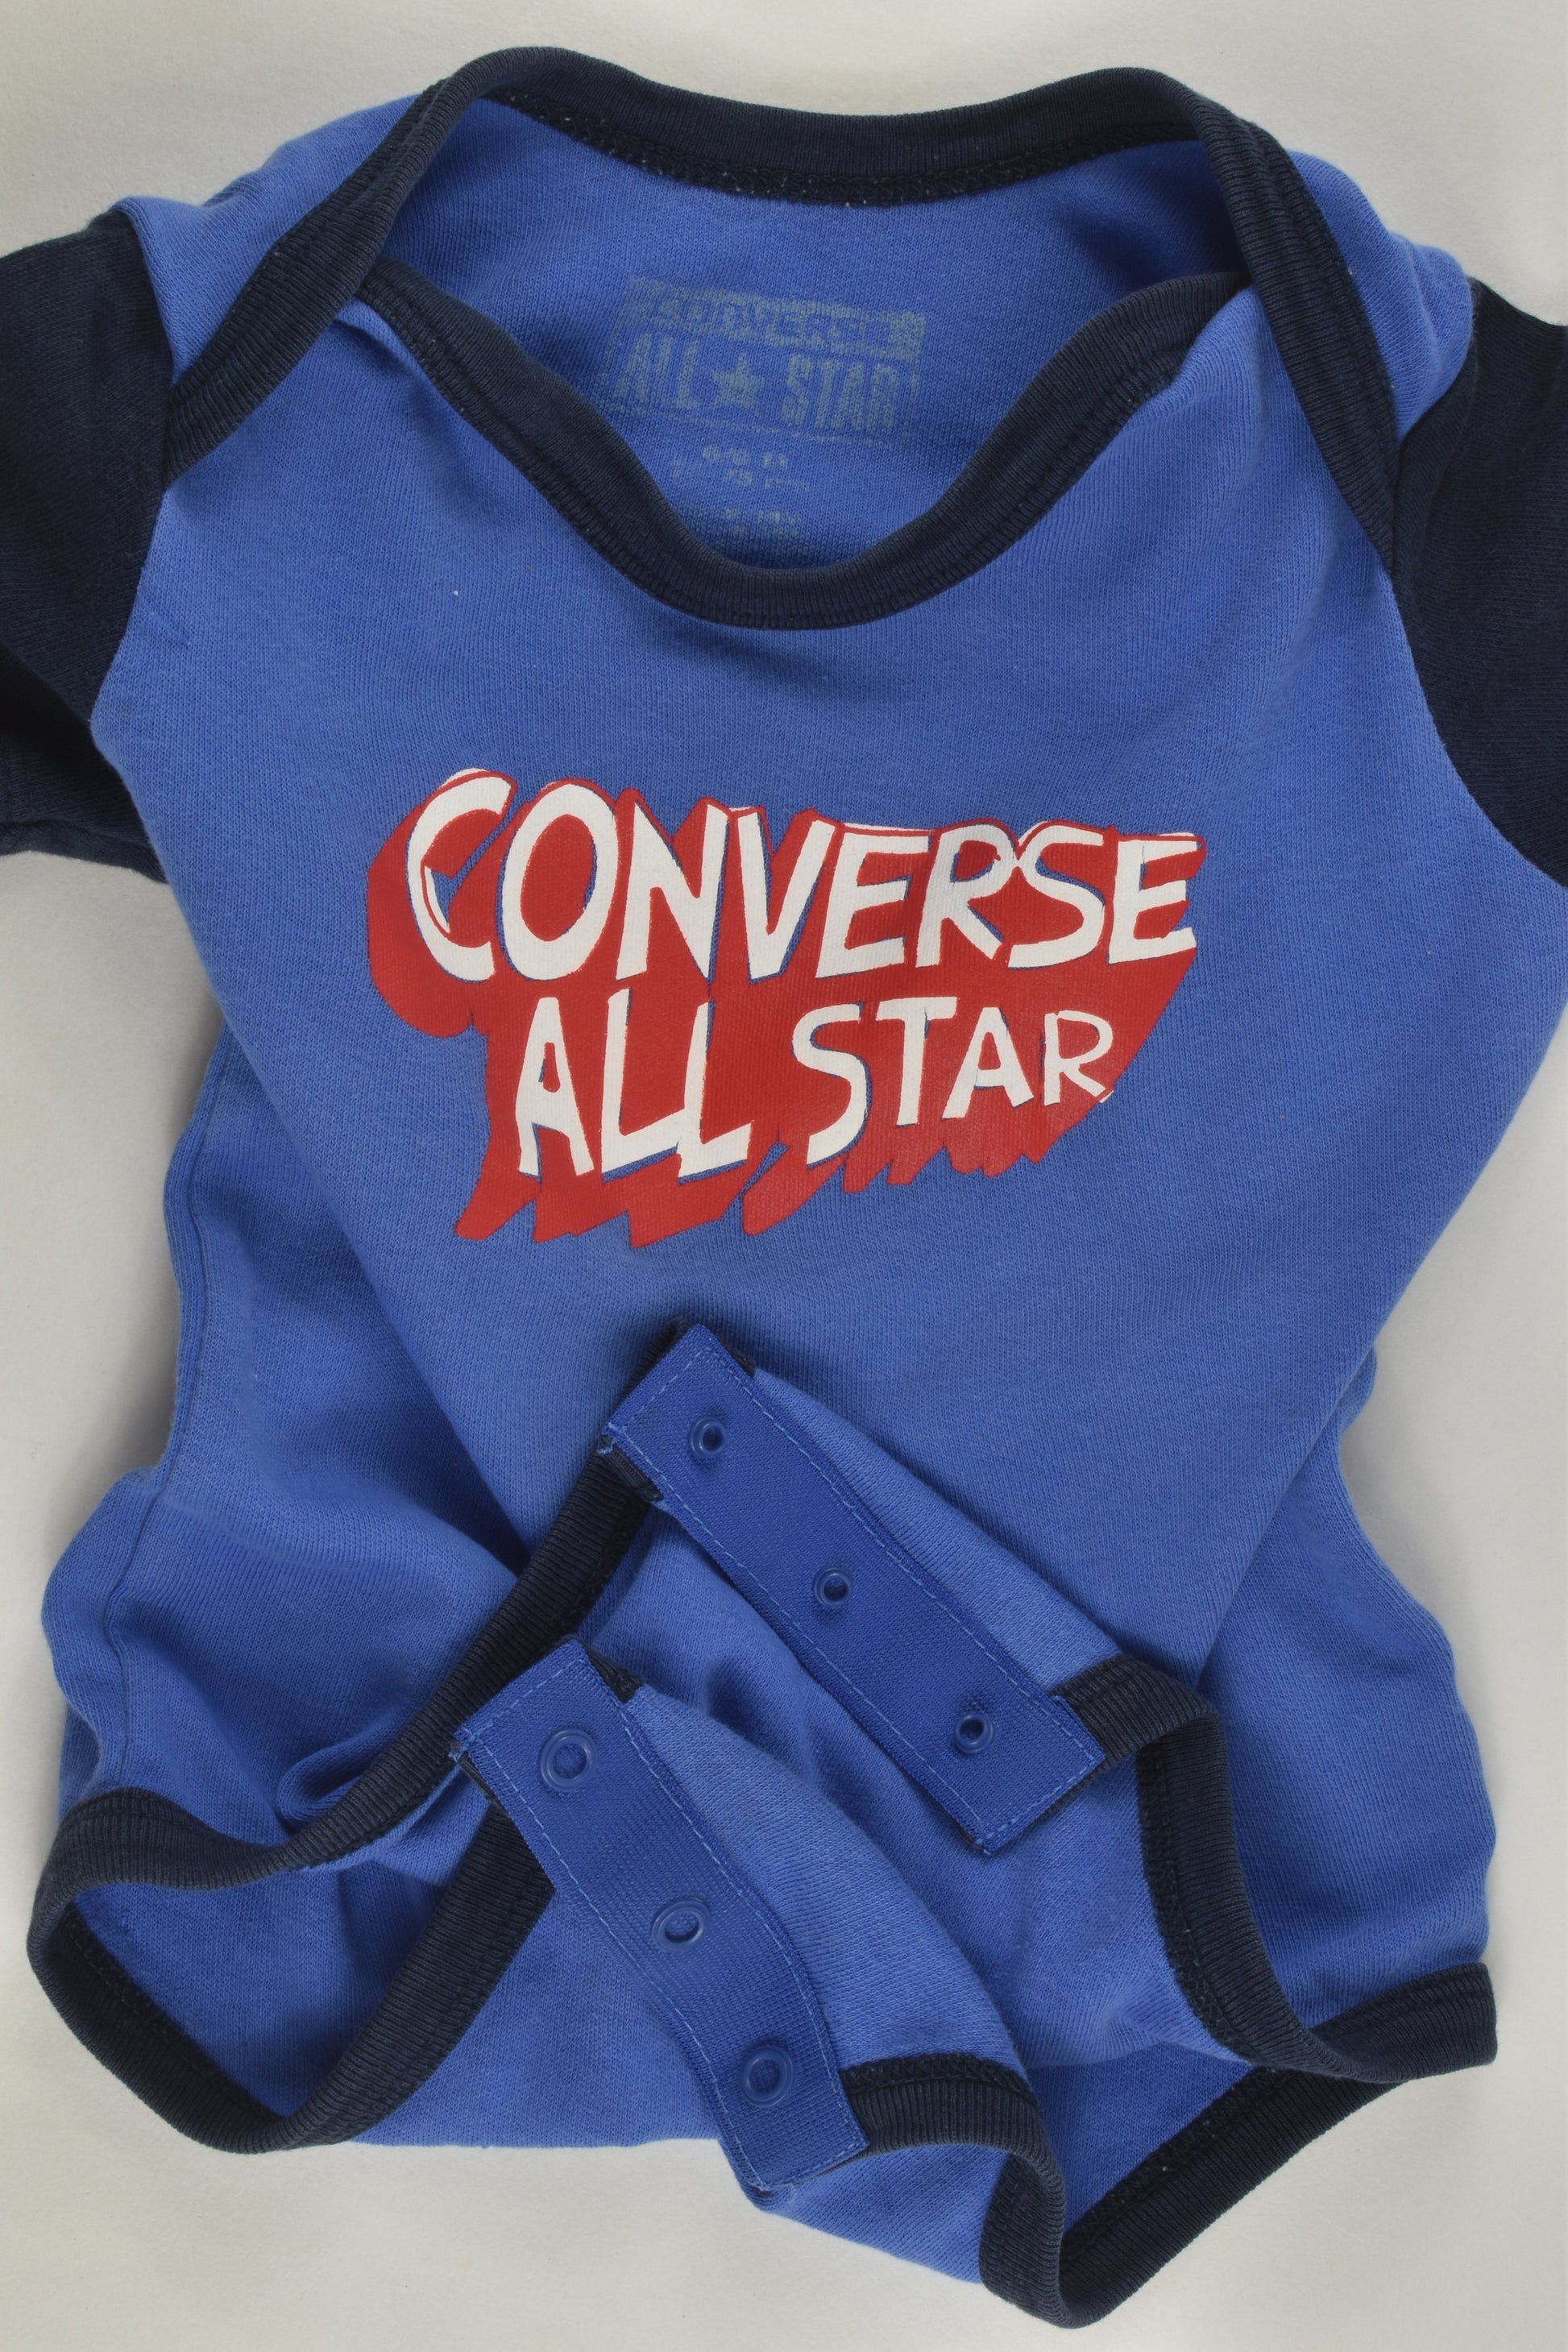 Converse All Star Size 0 Bodysuit